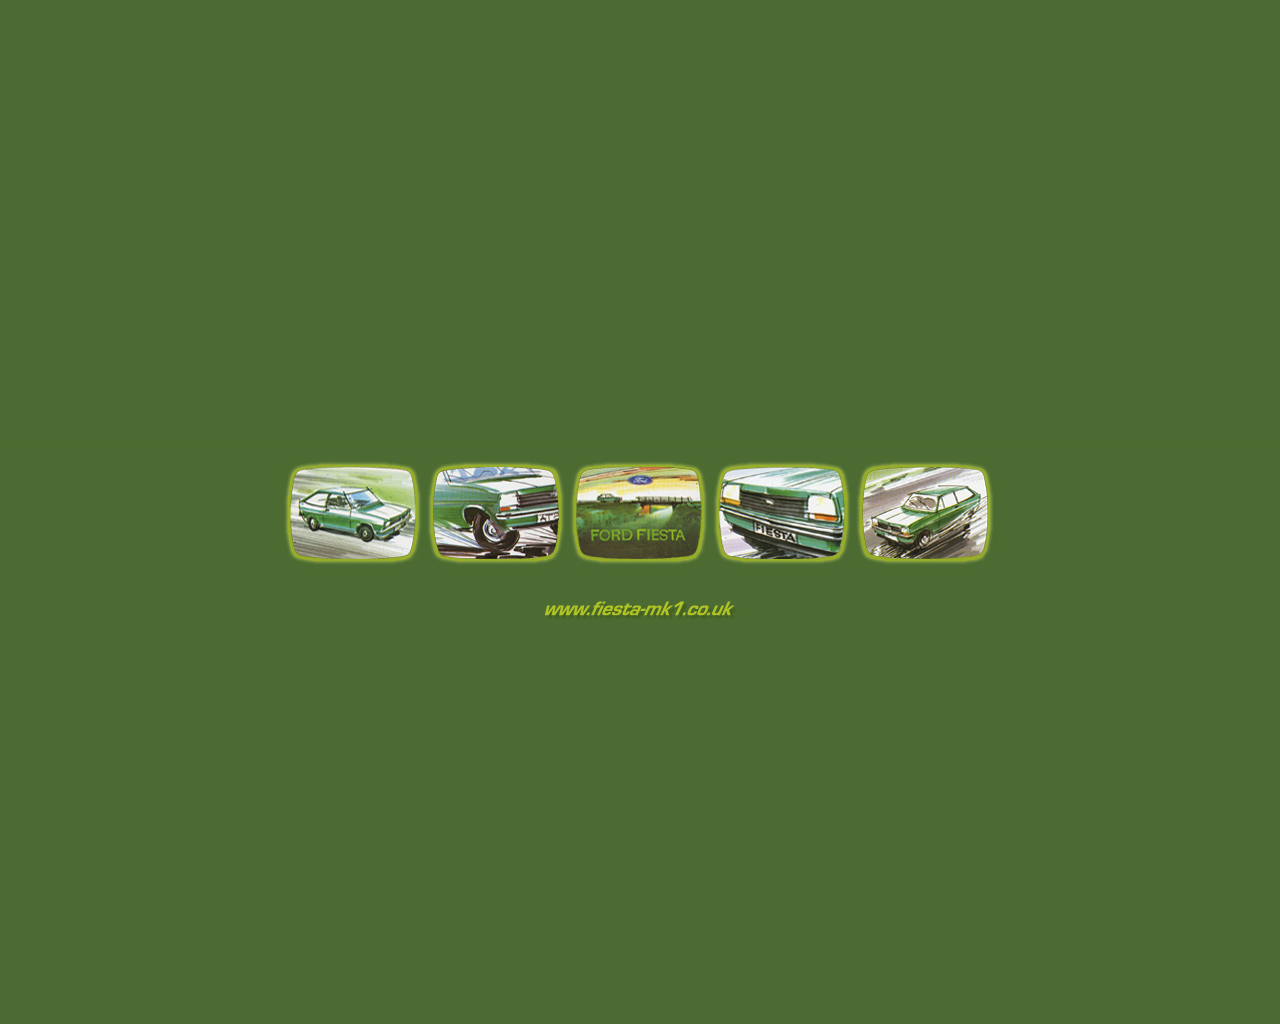 Fiesta MK1 Dark Green 1280 x 1024